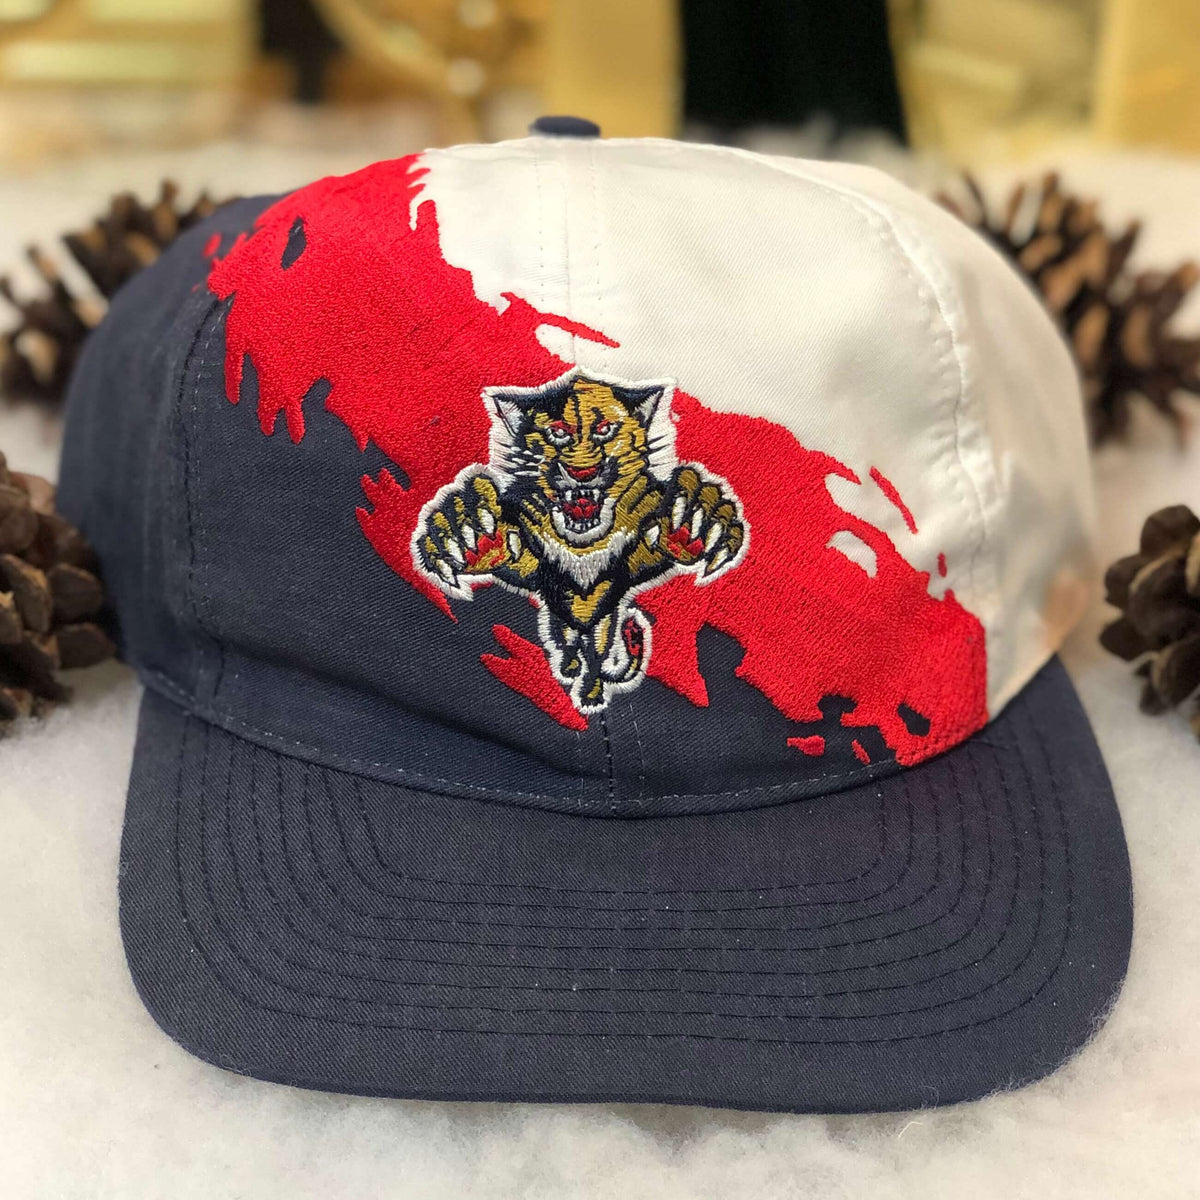 Vintage Florida Panthers Hat 